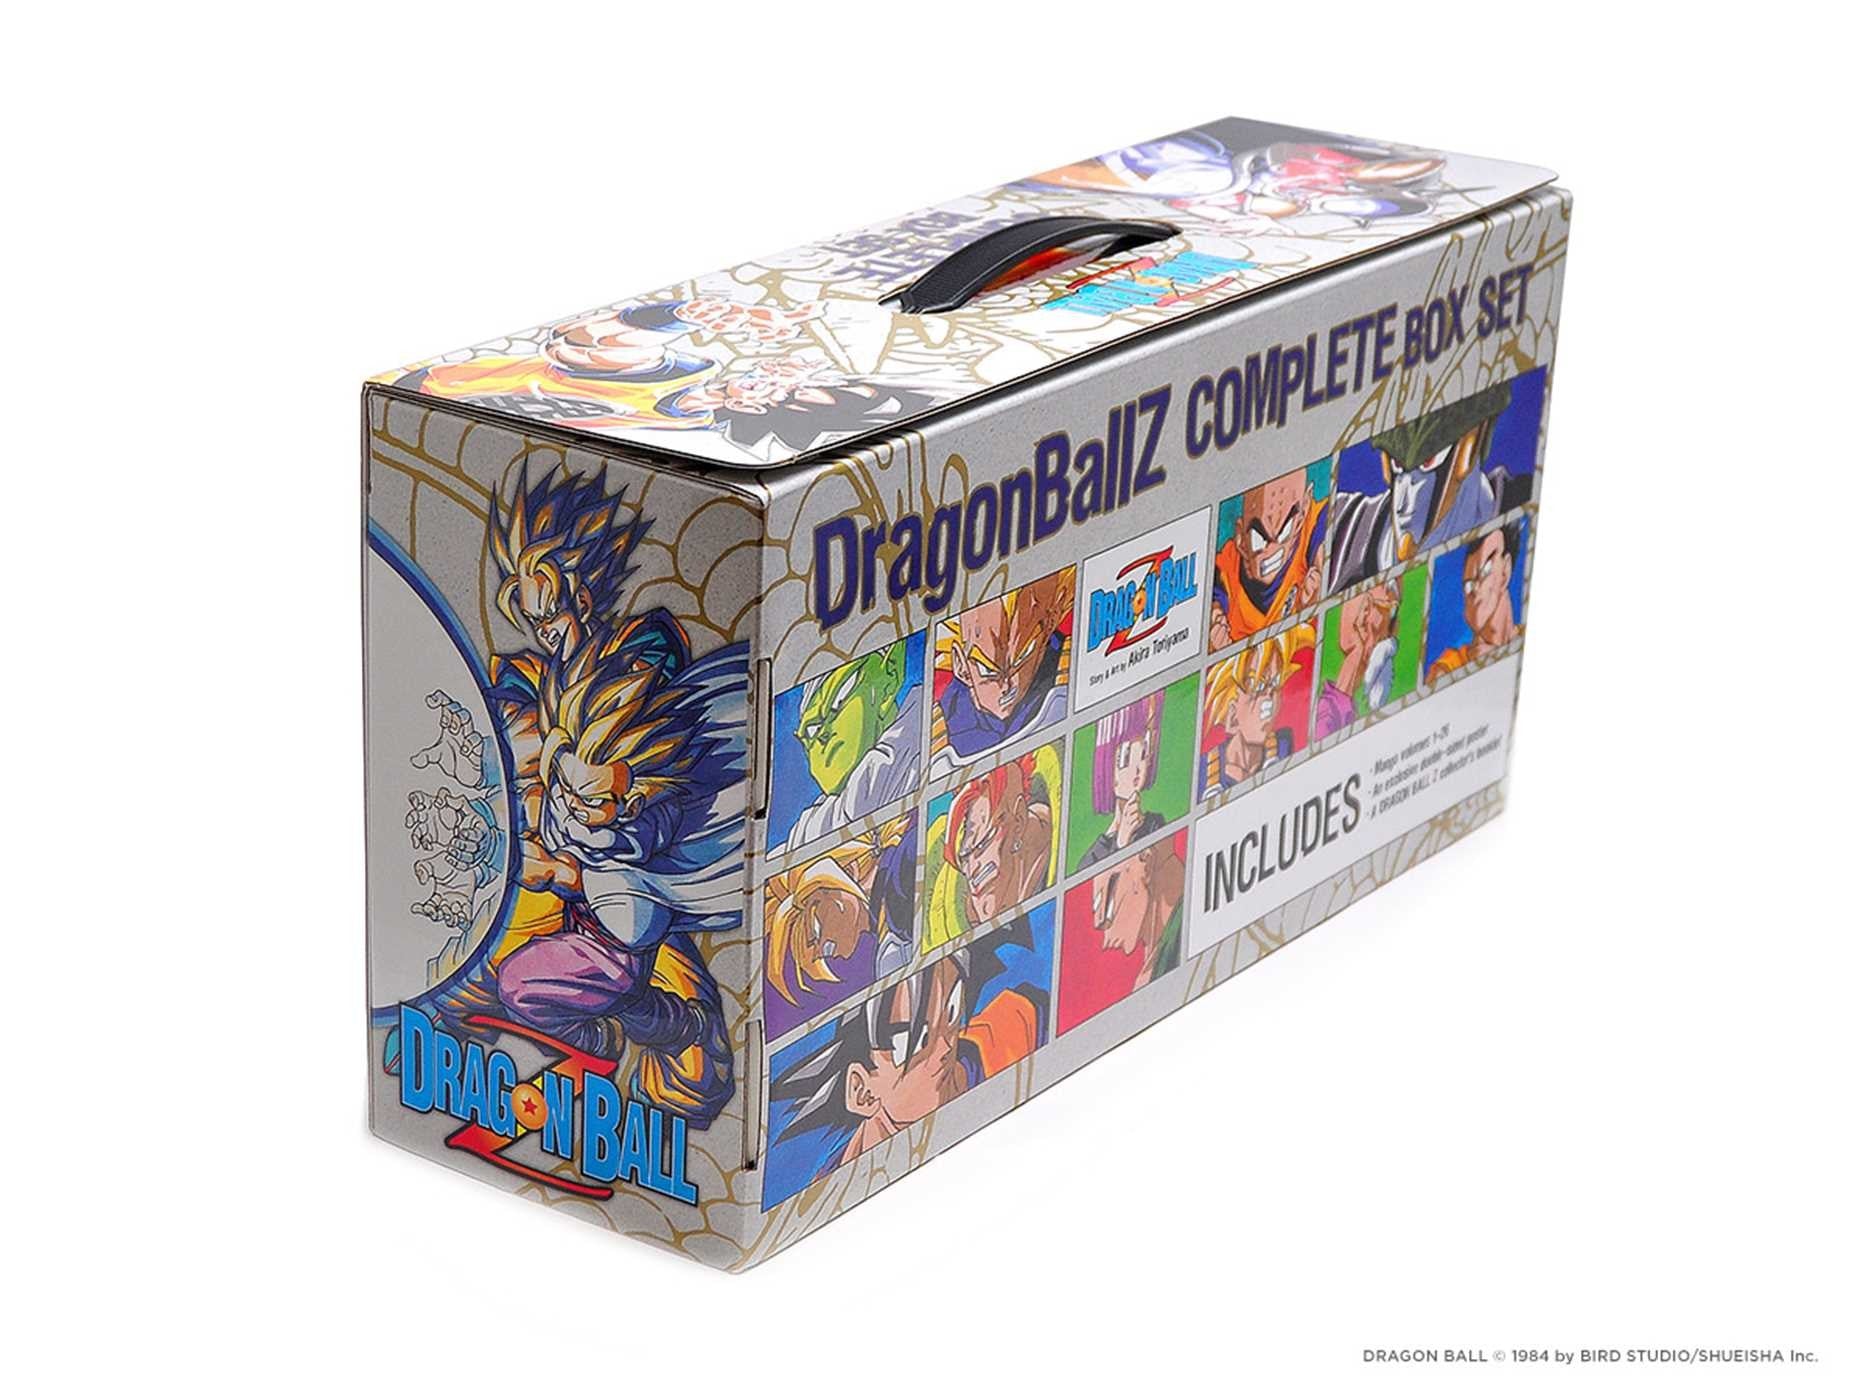 Dragon Ball Z Complete Box Set Vols. 1-26 with Premium by Akira Toriyama - LV'S Global Media